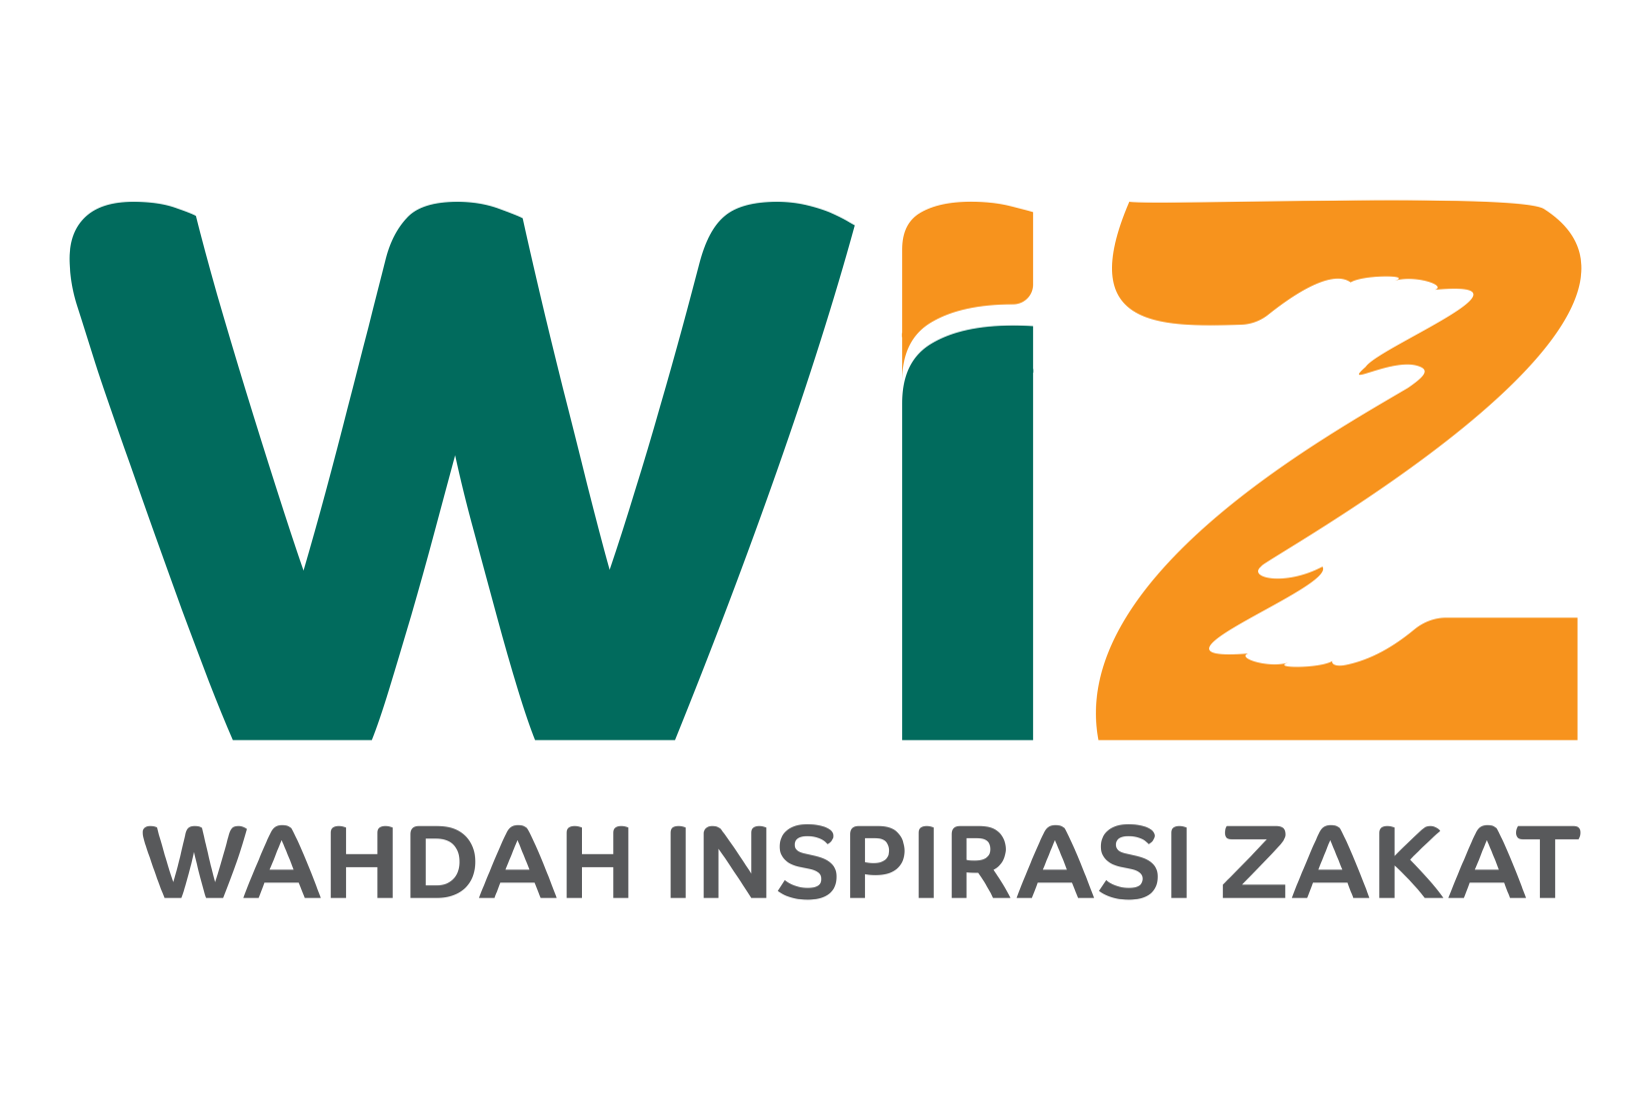 Wahdah Inspirasi Zakat